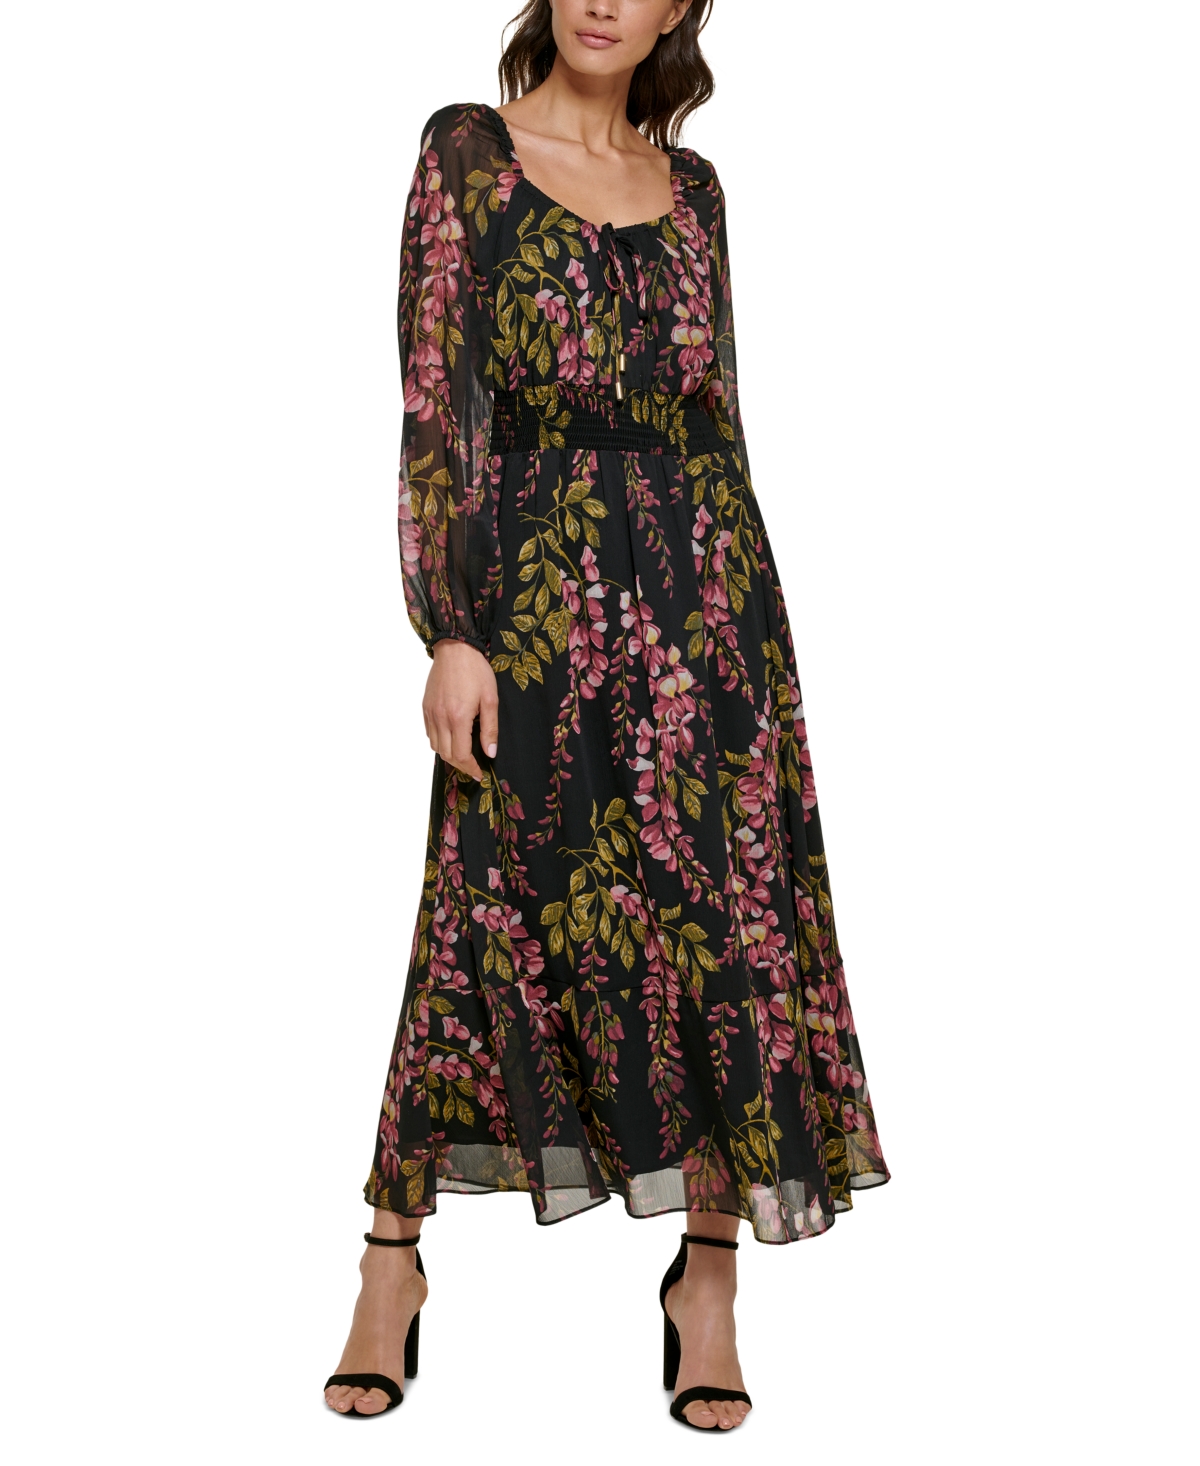 kensie Women's Smocked-Waist Blouson-Sleeve Dress